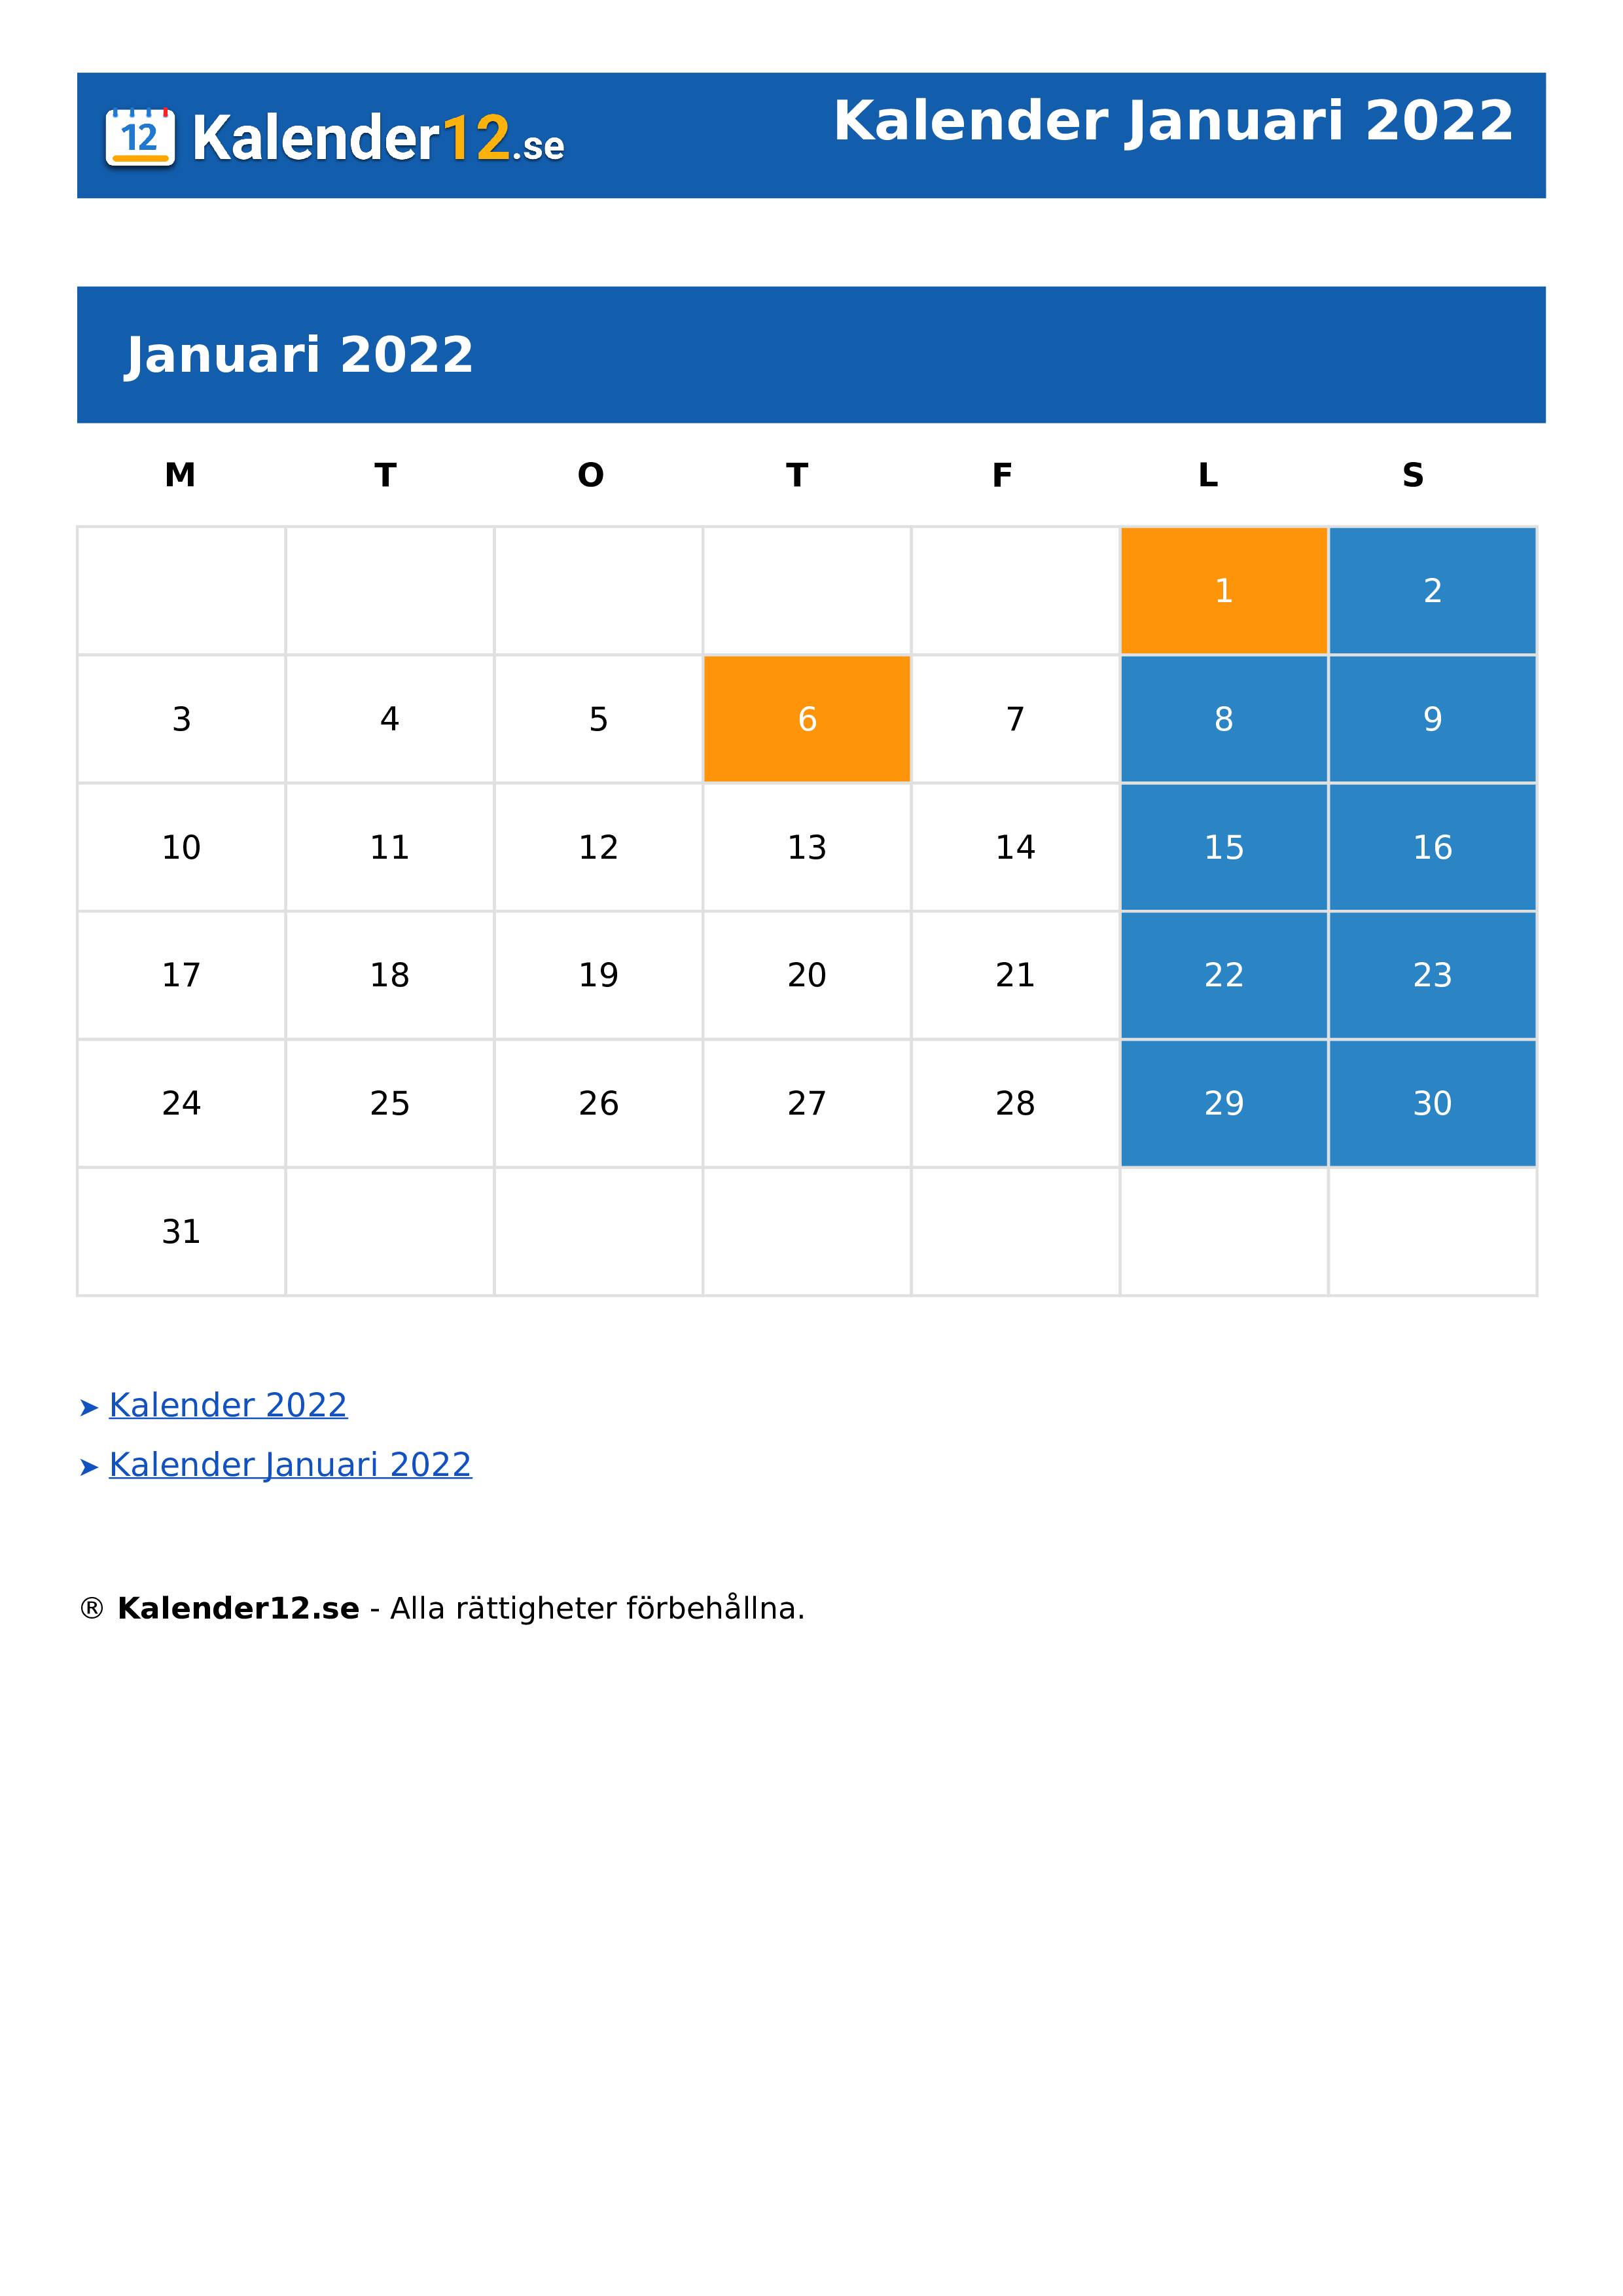 Januari 2022 kalender January 2022